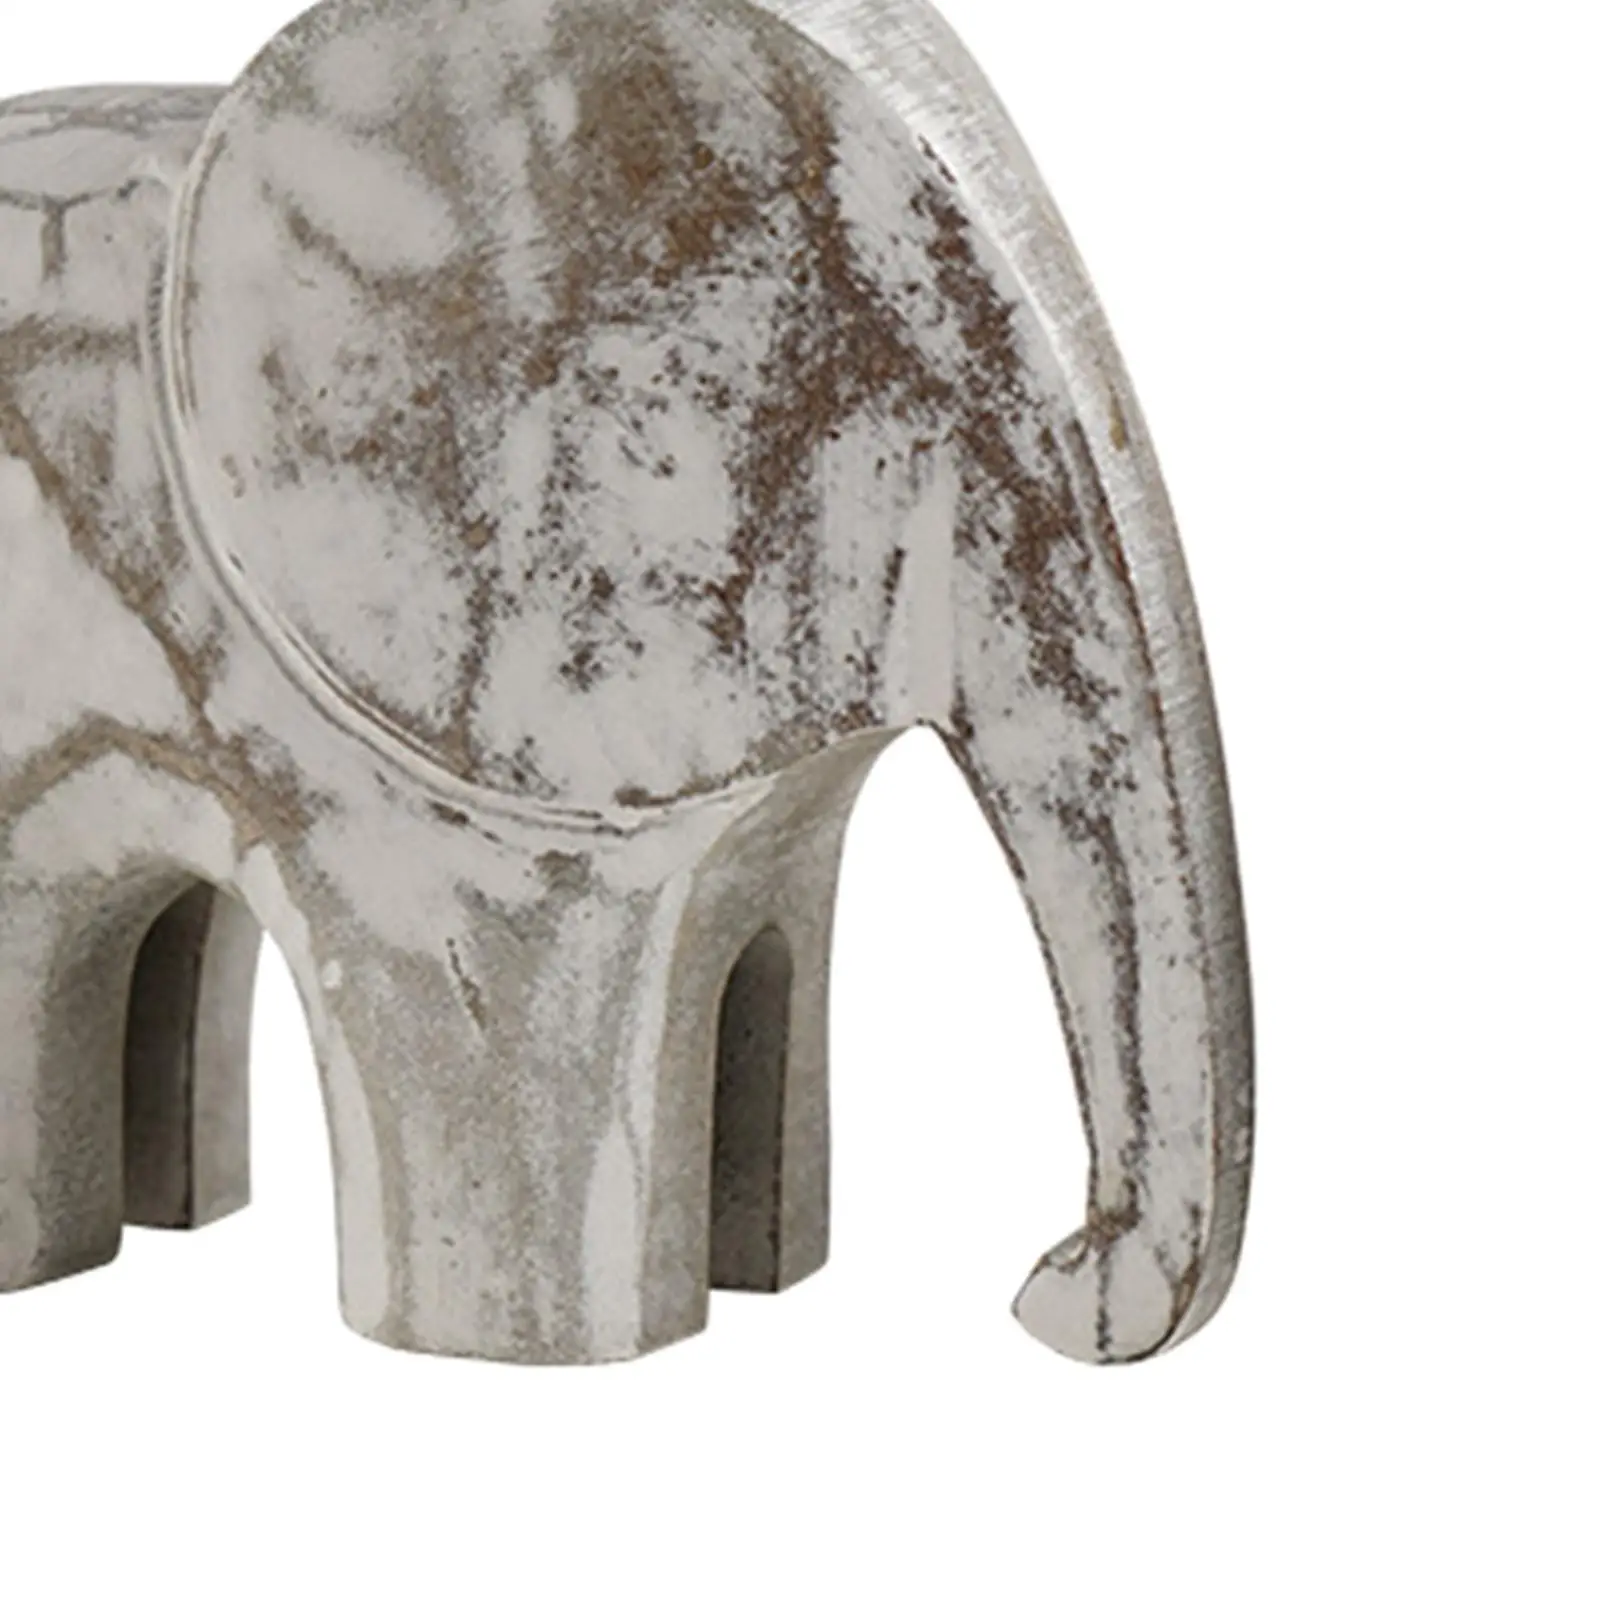 Handmade Elephant Statue Art Craft Animal Ornament Furnishing 1Pair for Bookshelf Office Desktop Home Living Room Decorative